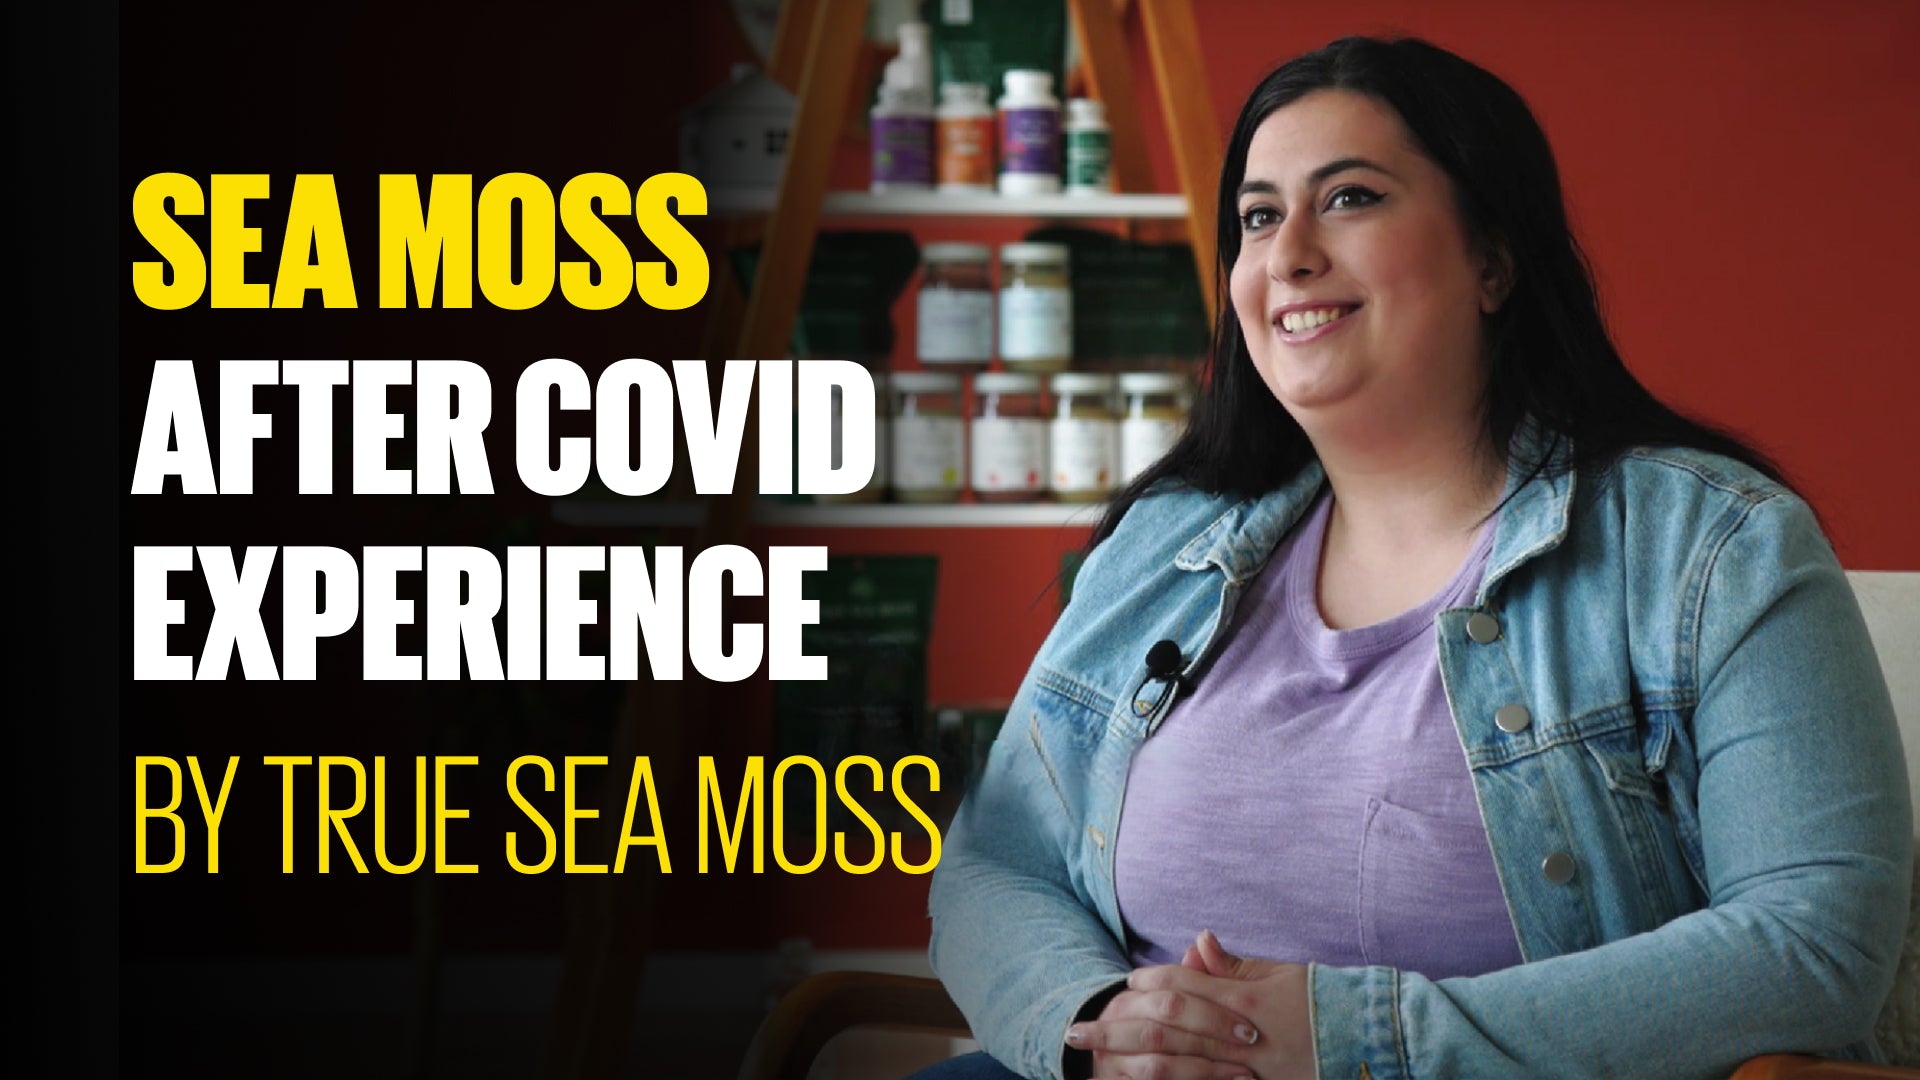 True Sea Moss: Real sea moss user’s experience